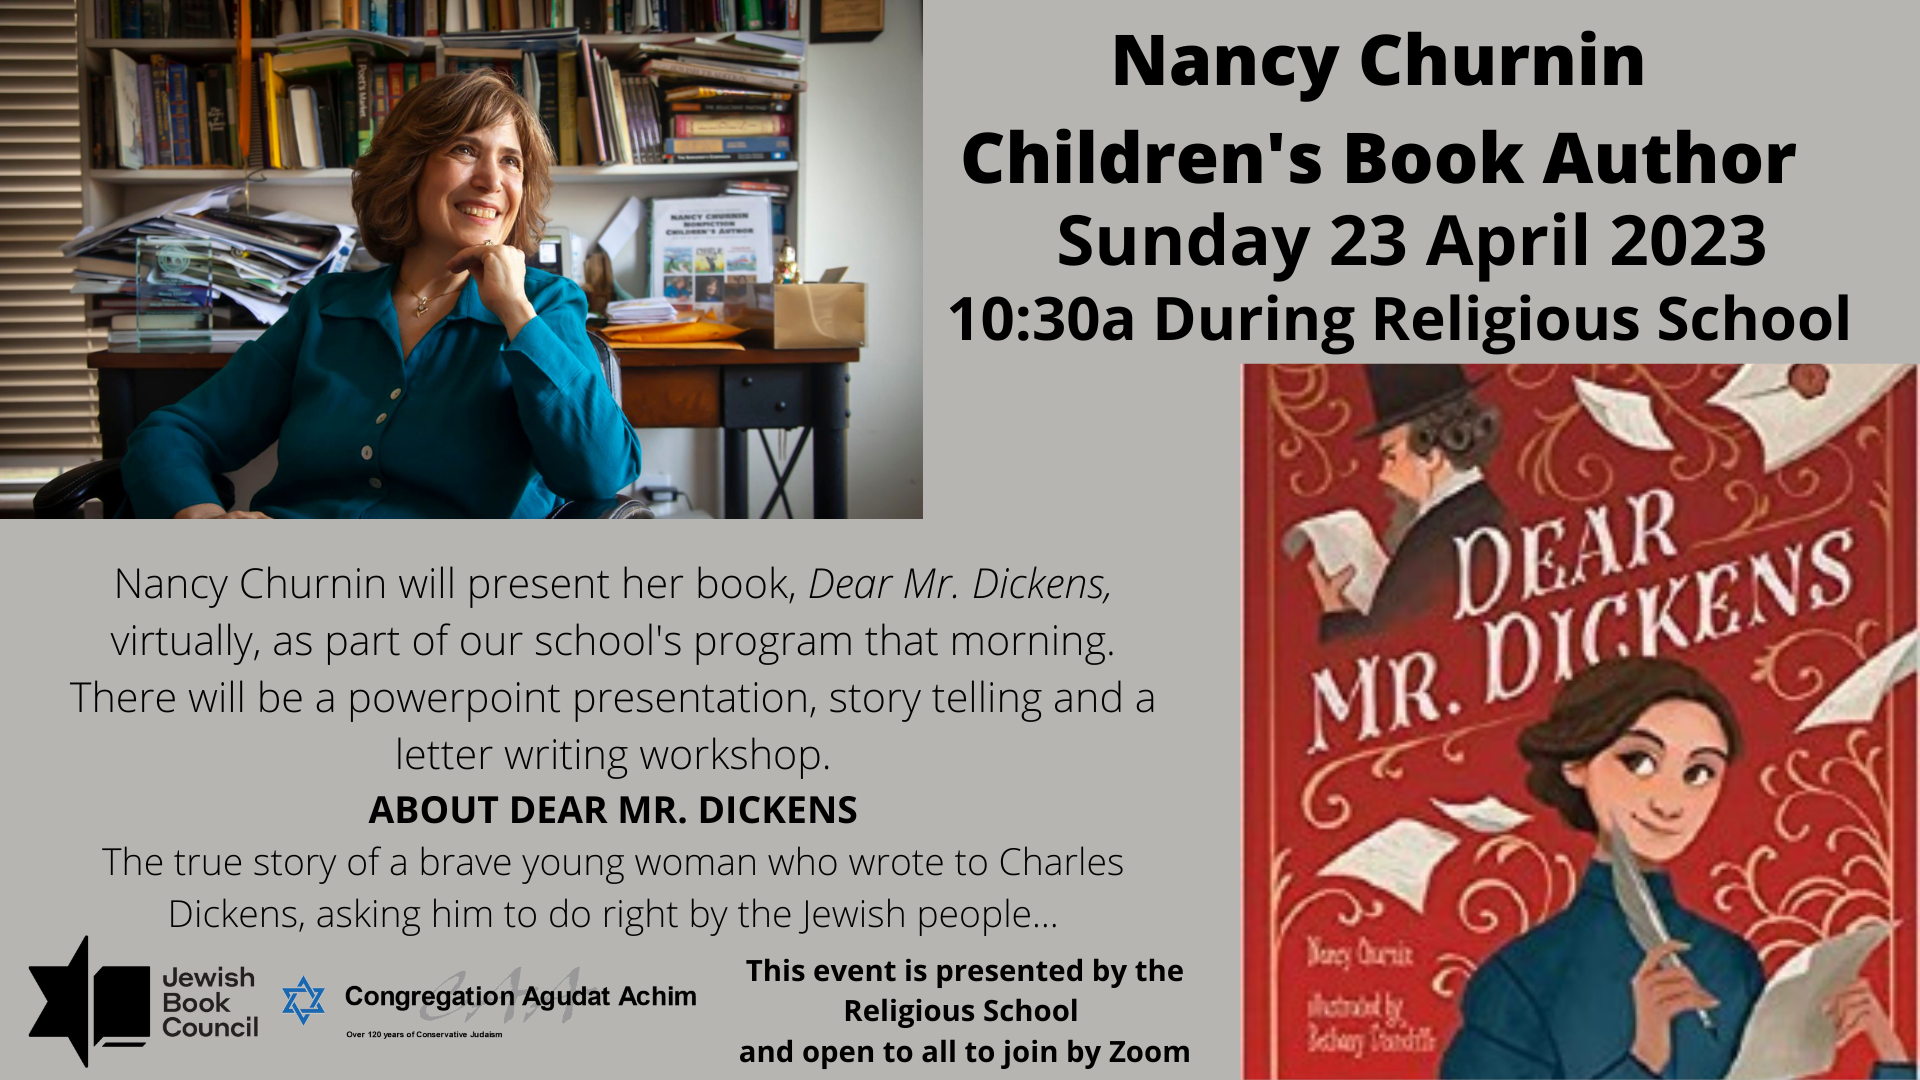 Nancy Churnin Children's Book Author